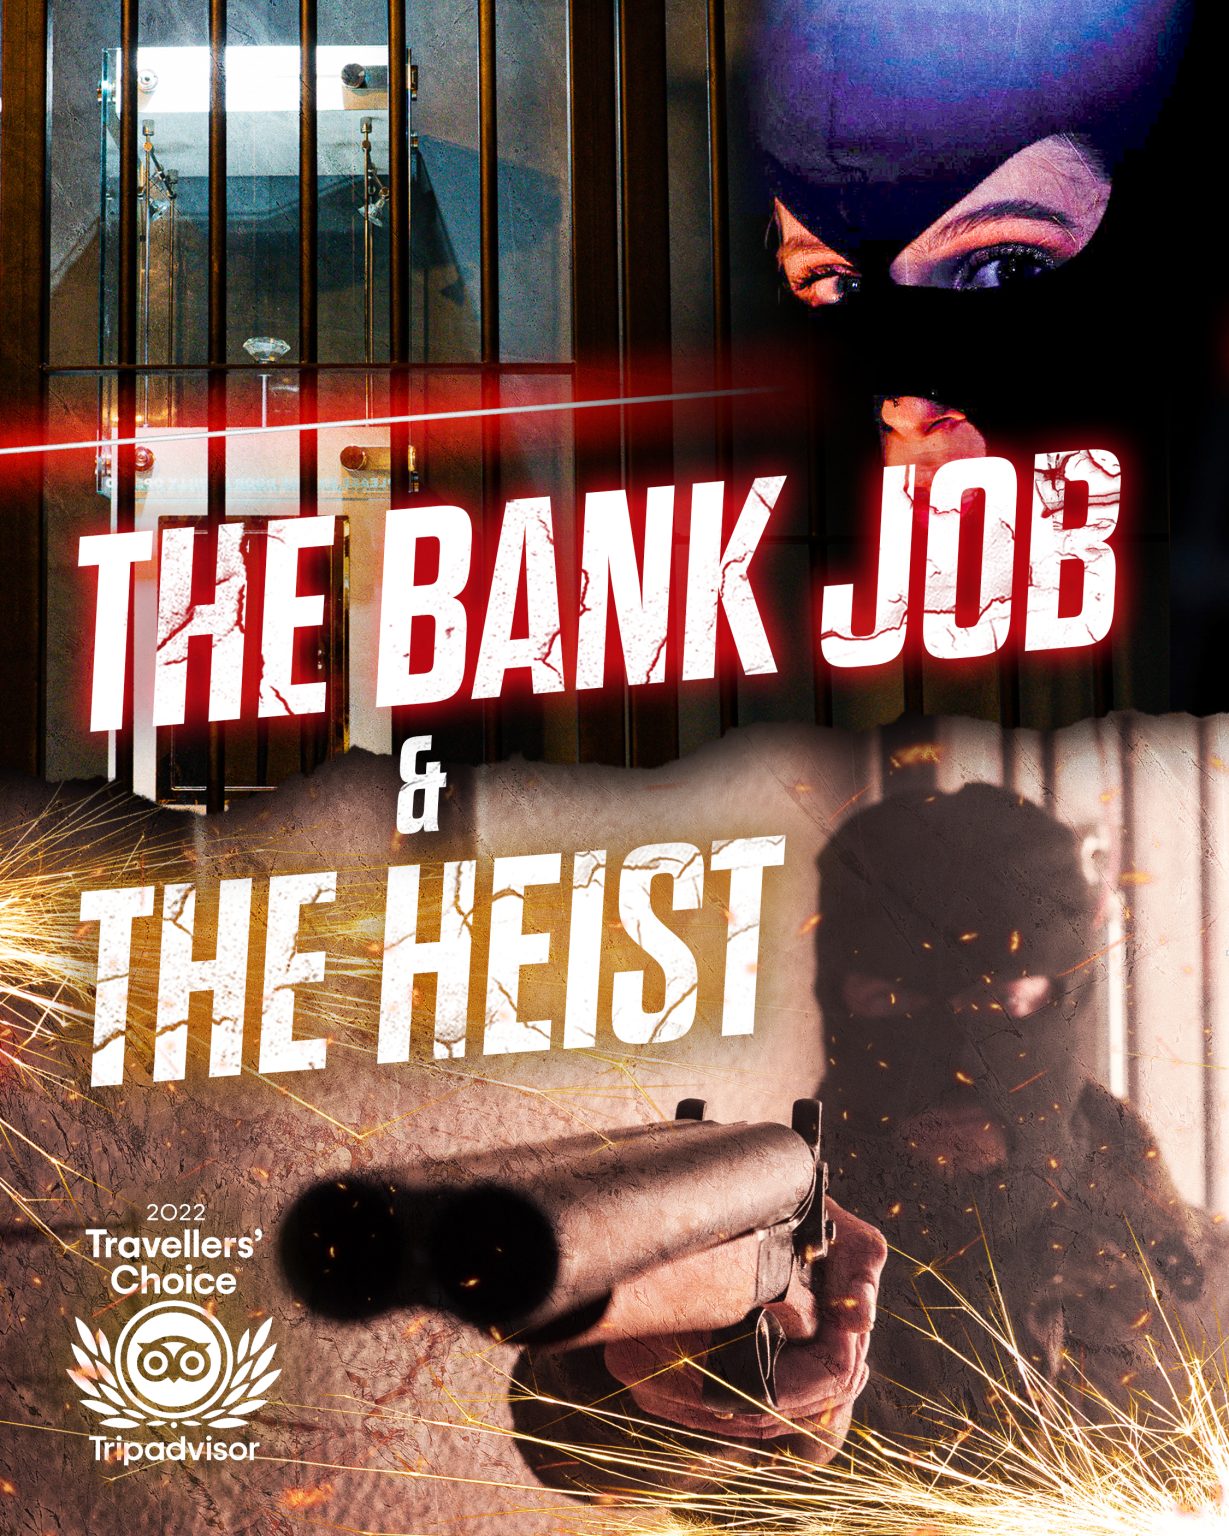 3. The Bank Job - Summer Carousel